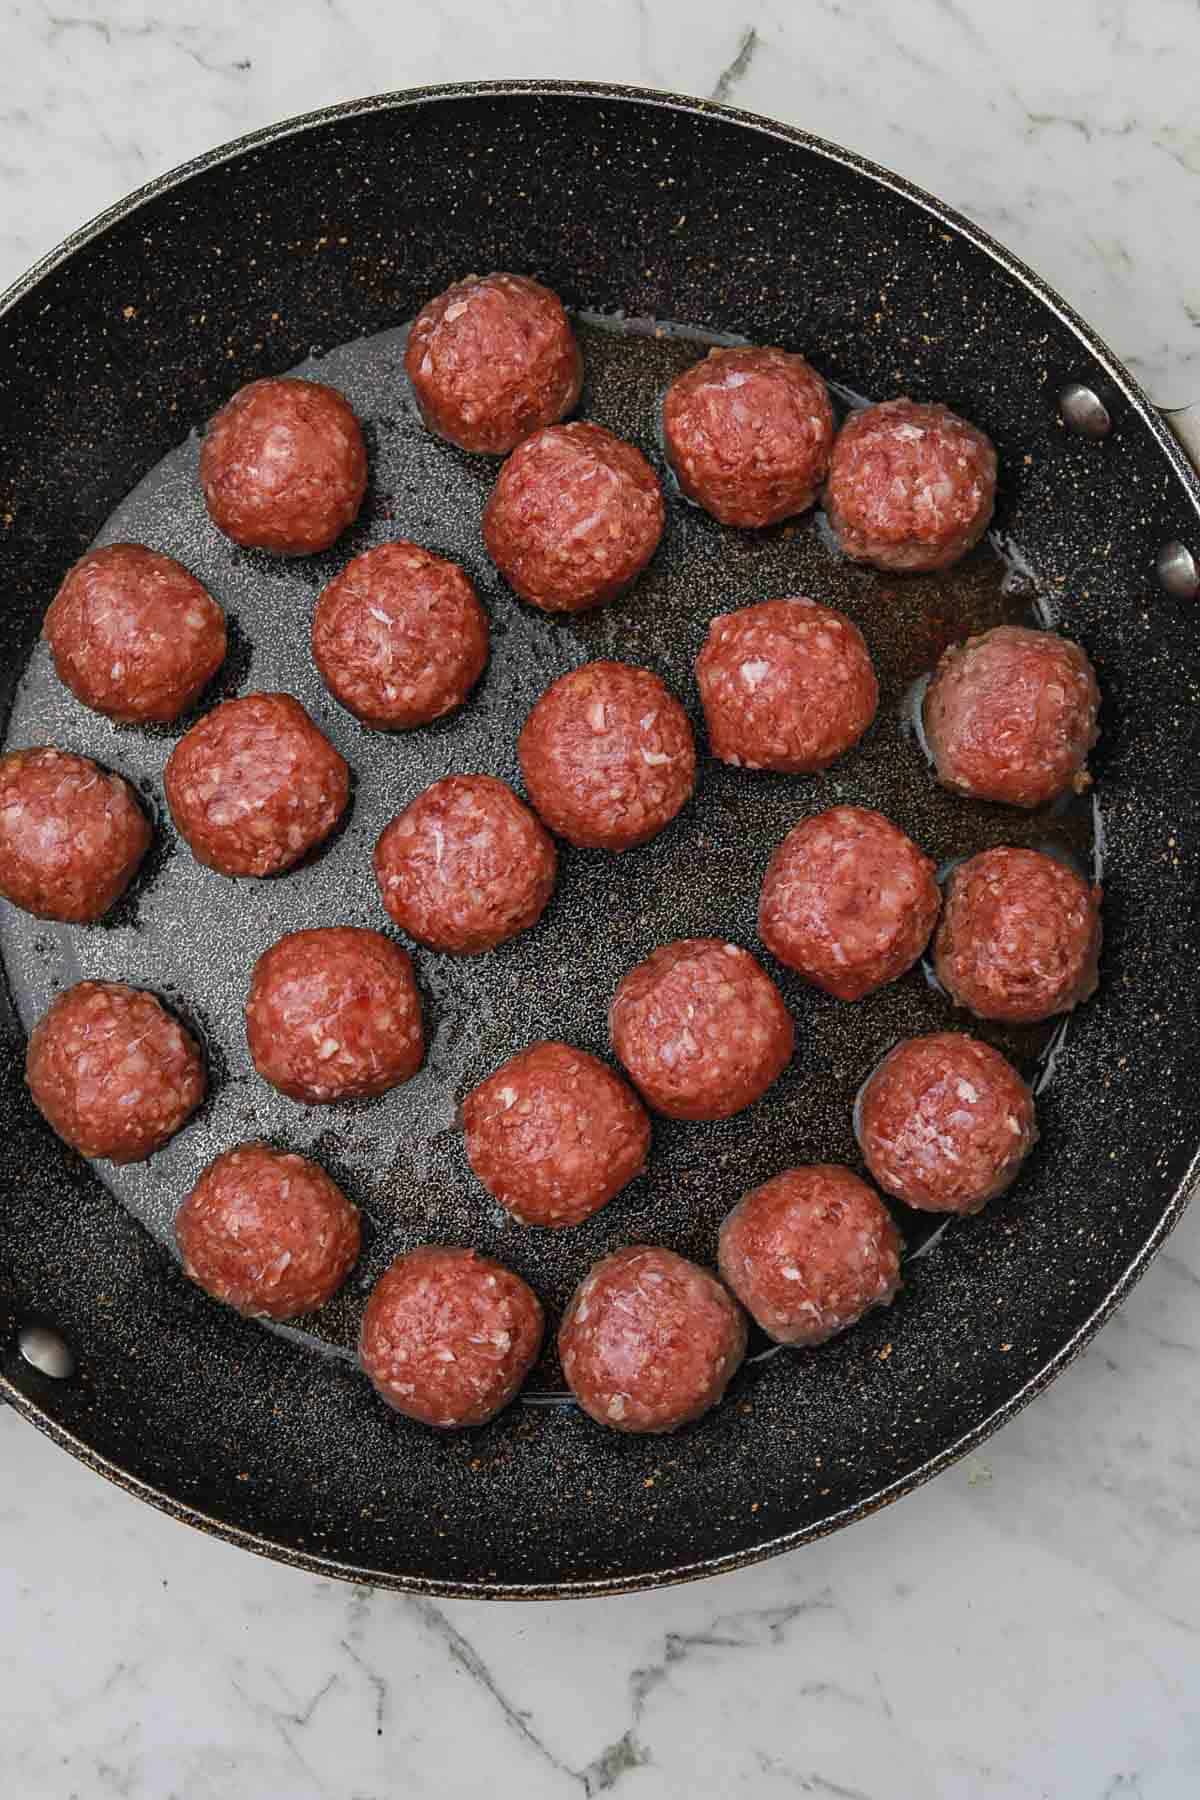 meatballs arranged in a skillet.